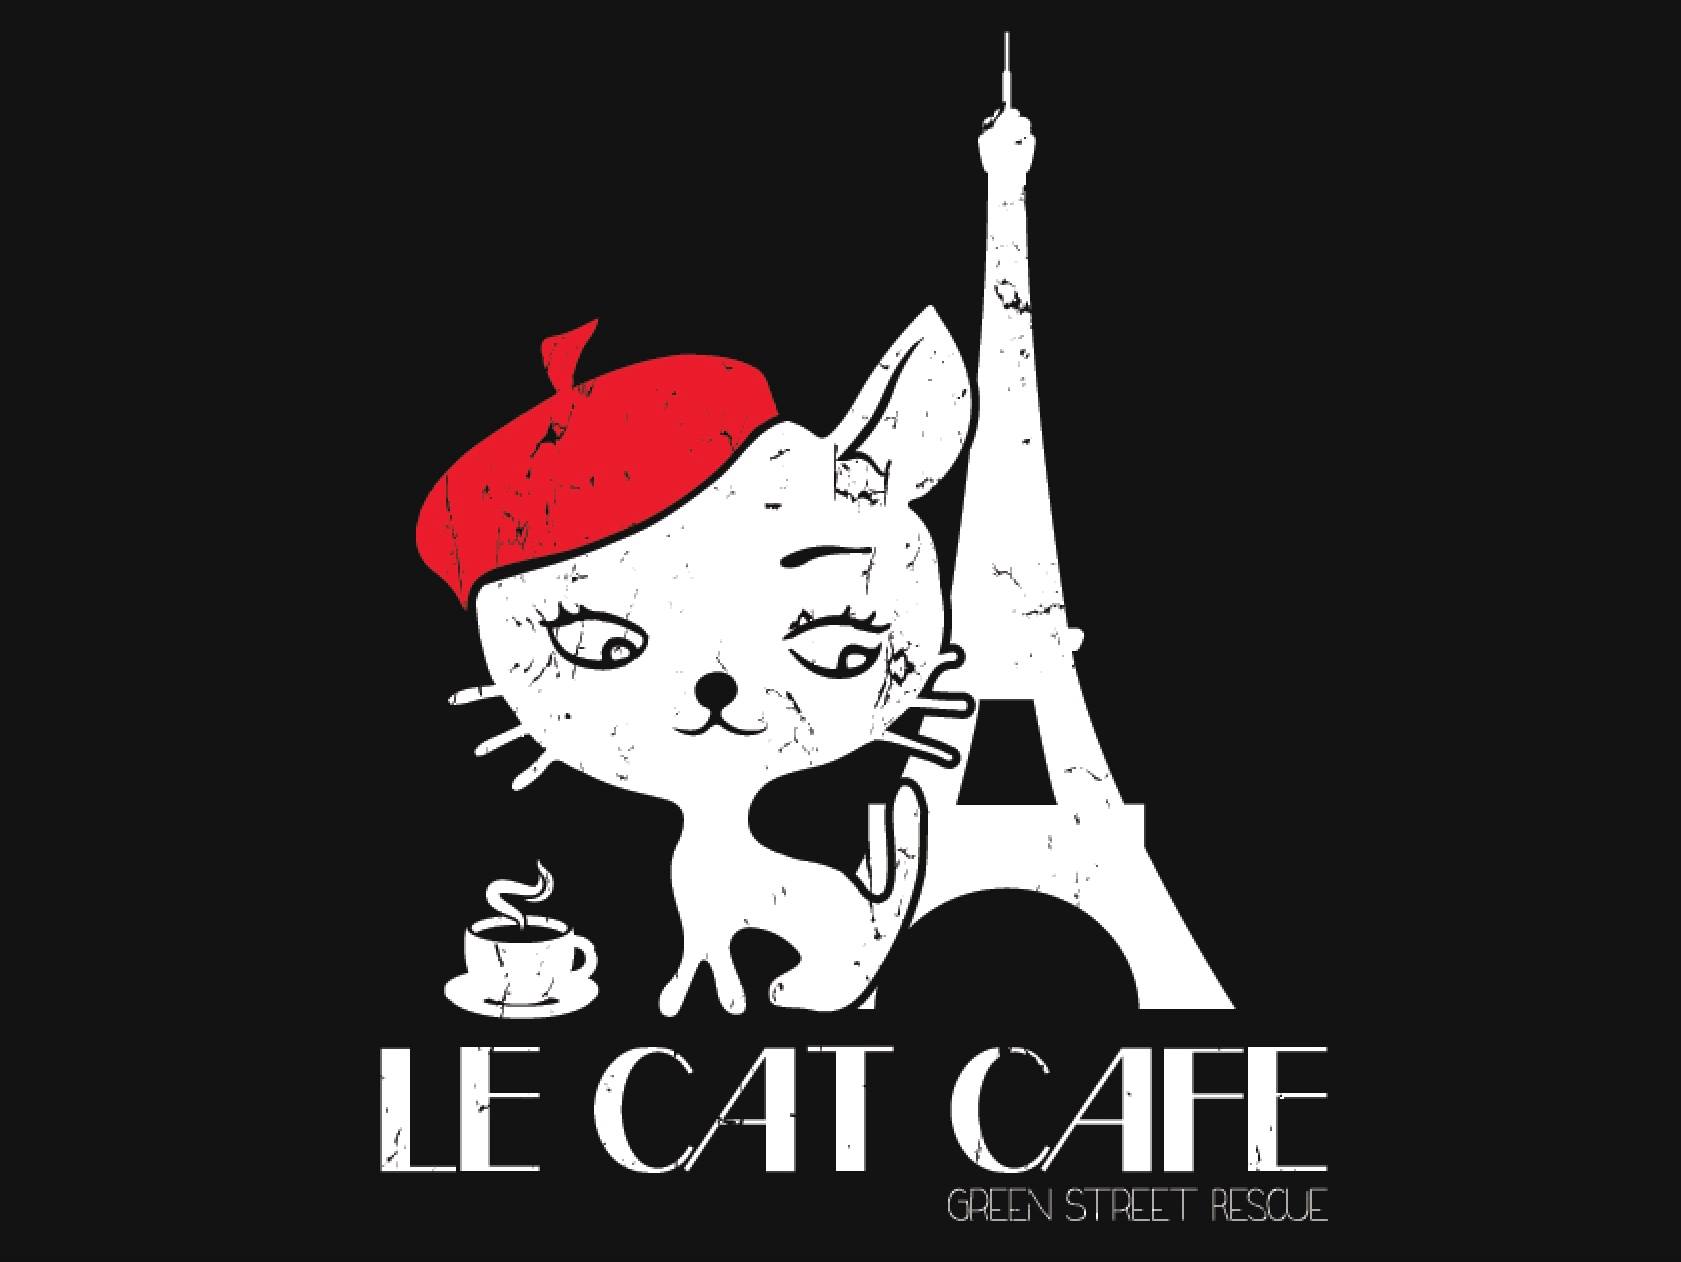 Company logo of Le Cat Cafe